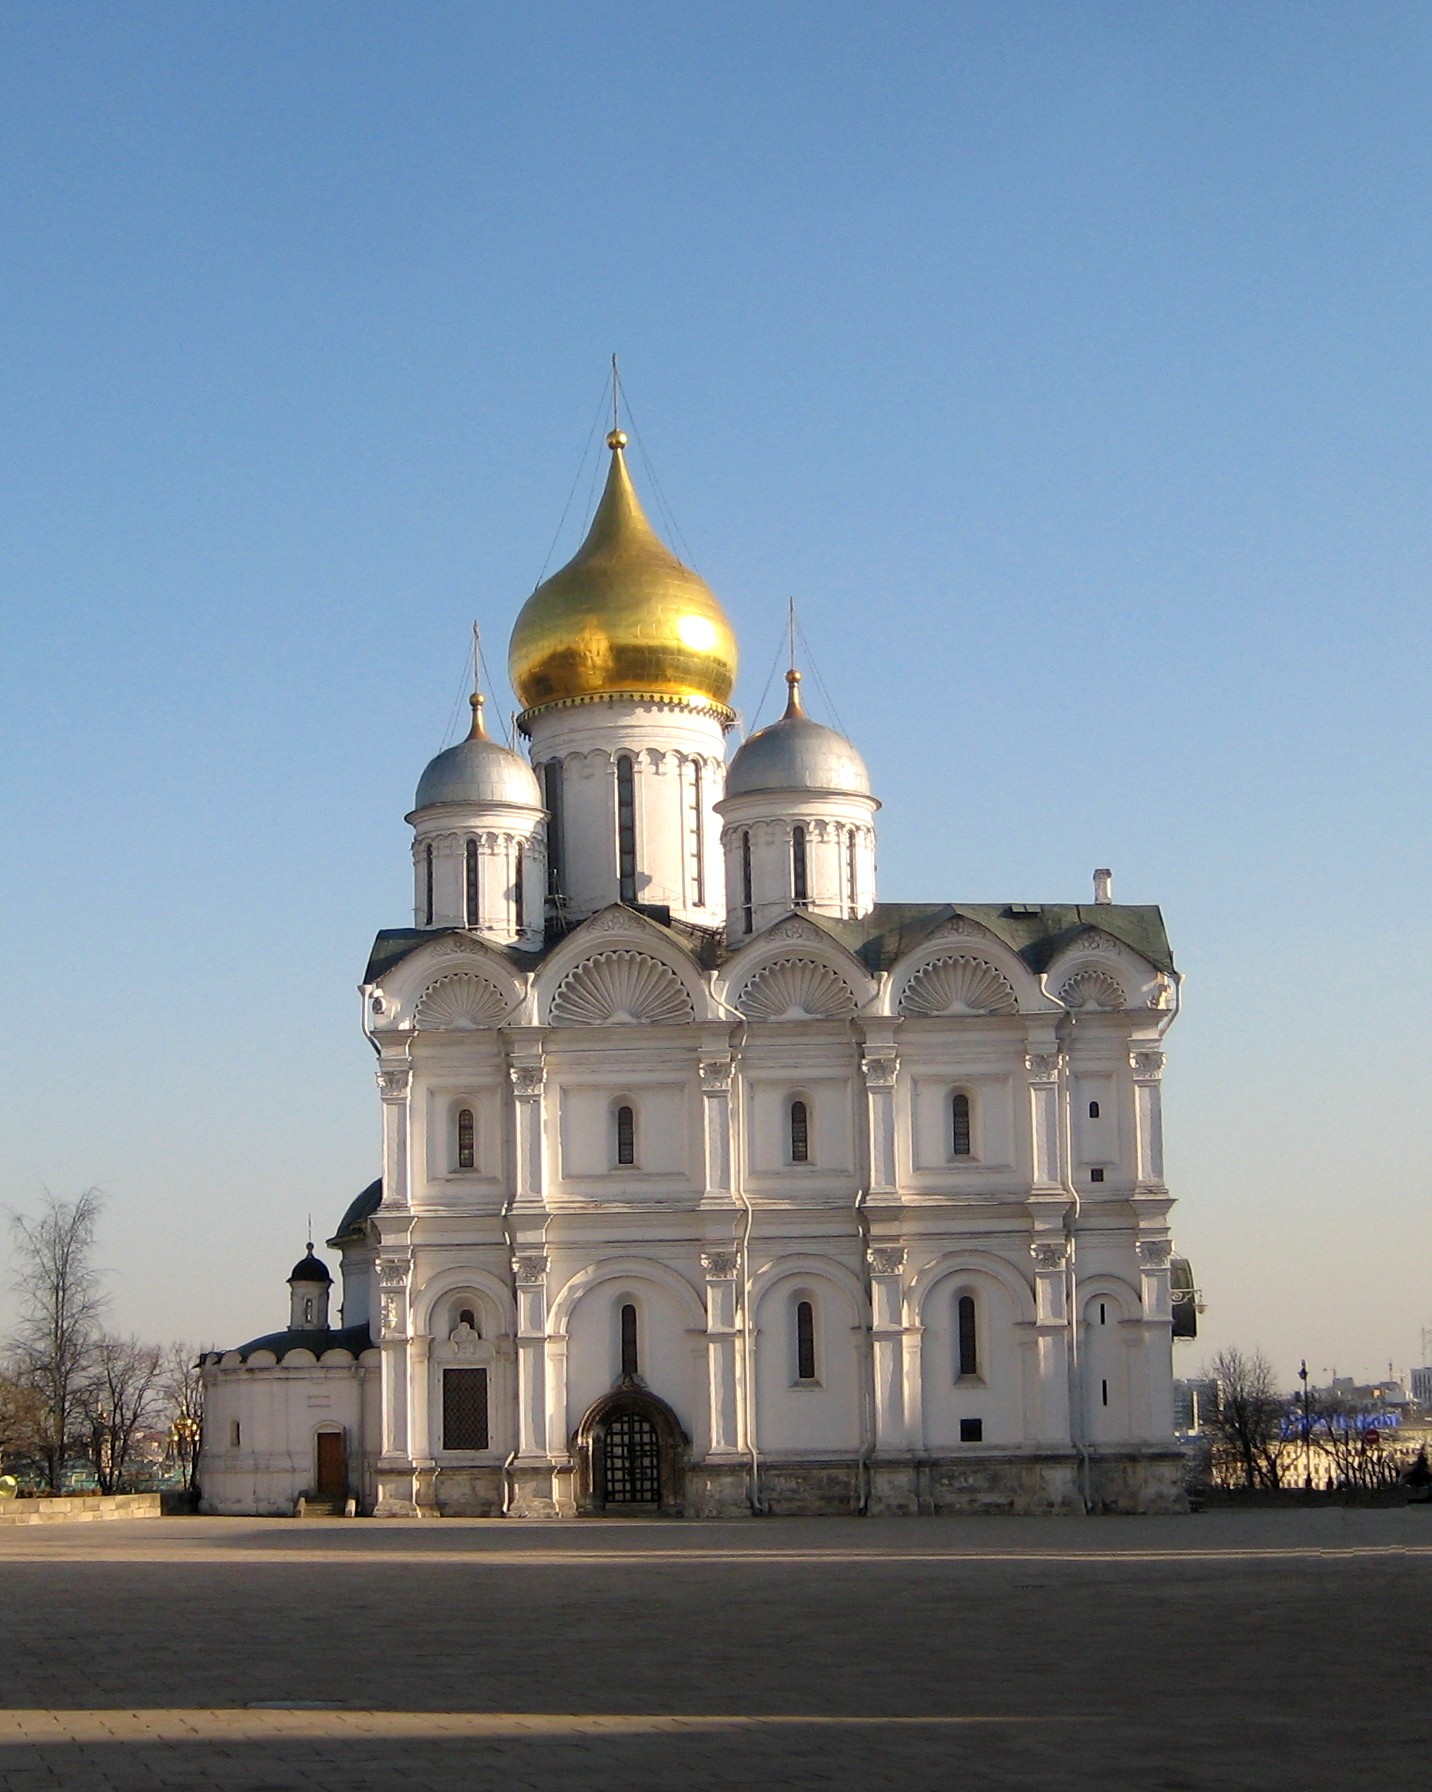 Архангельский храм